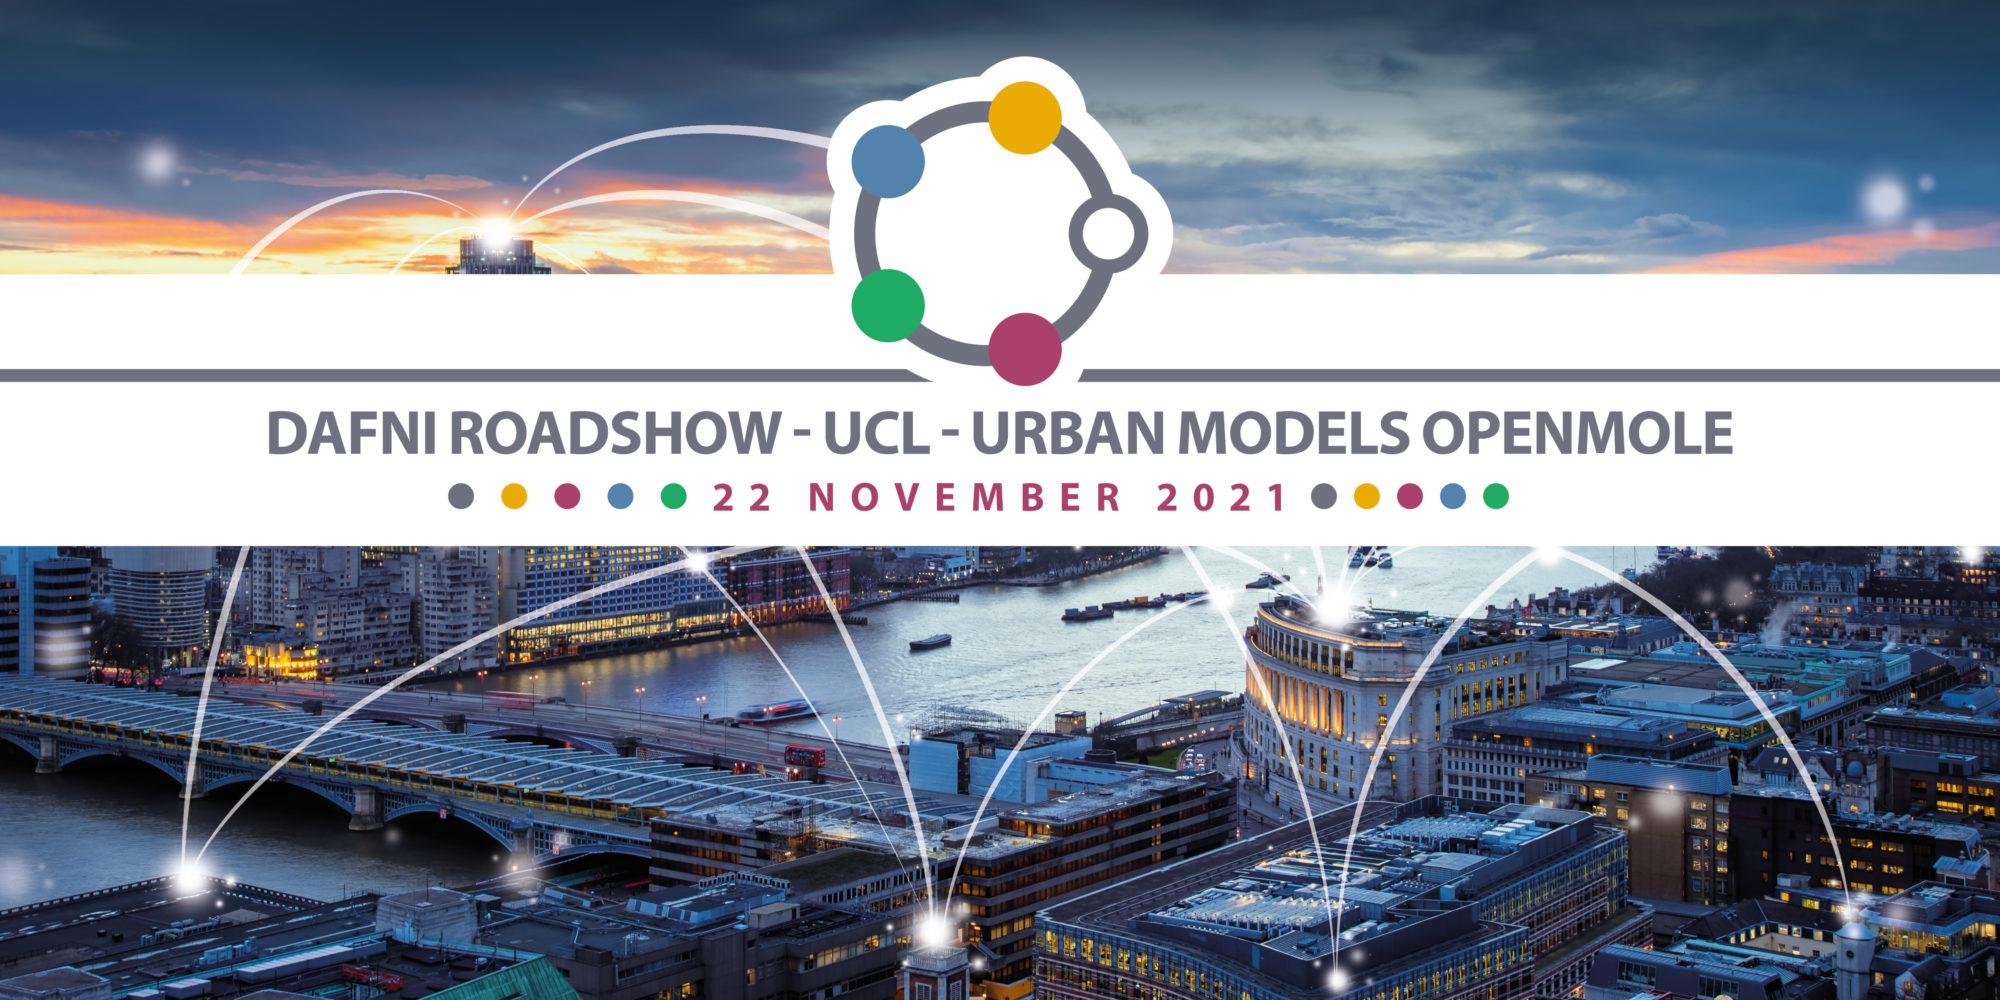 Dafni Roadshow UCL urban models